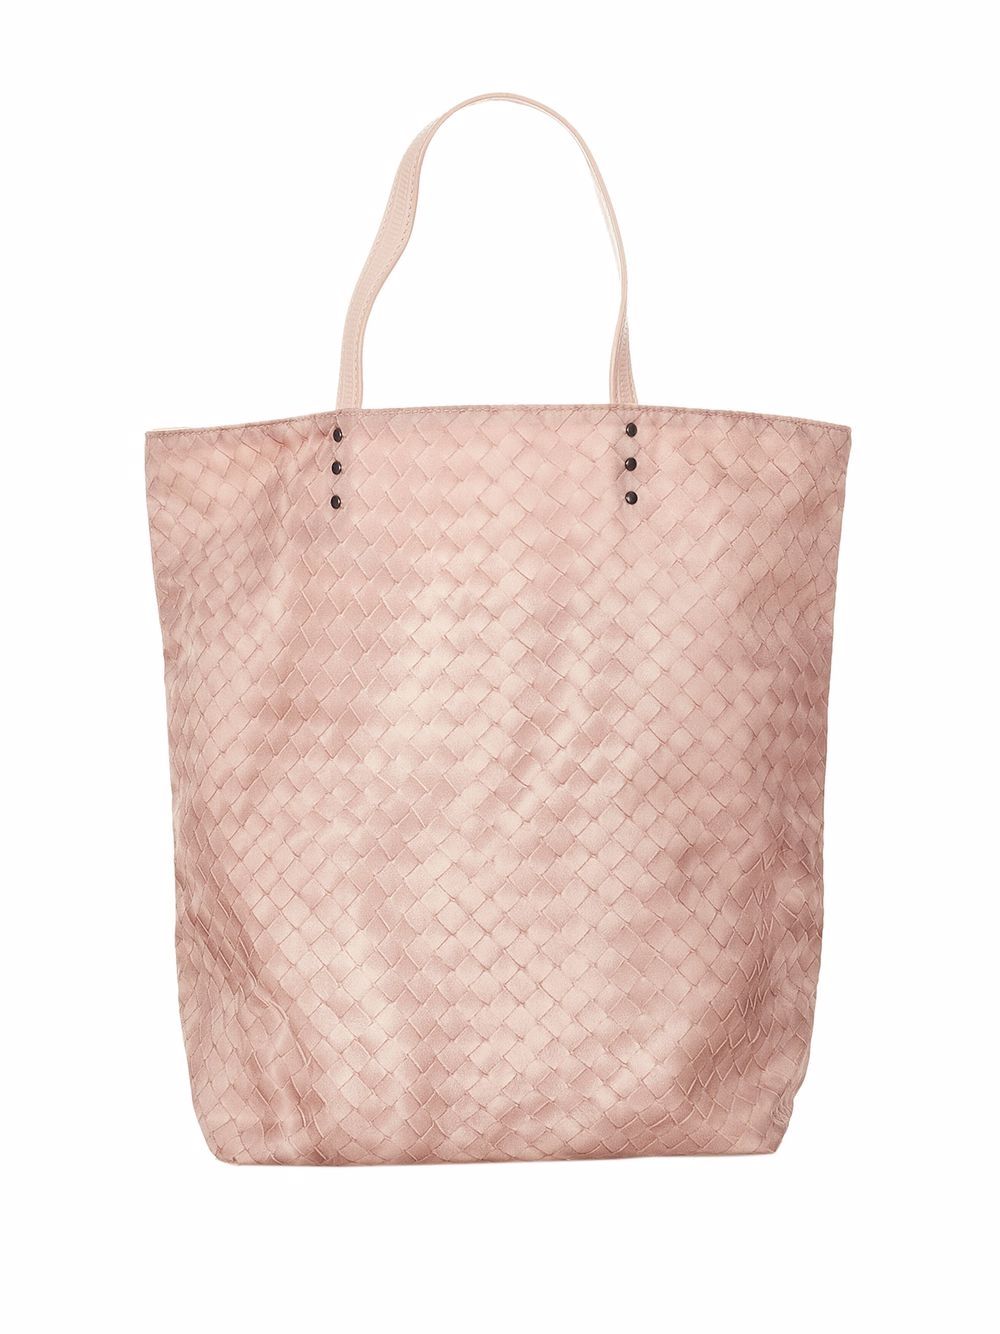 фото Bottega veneta pre-owned сумка-тоут с плетением intrecciato